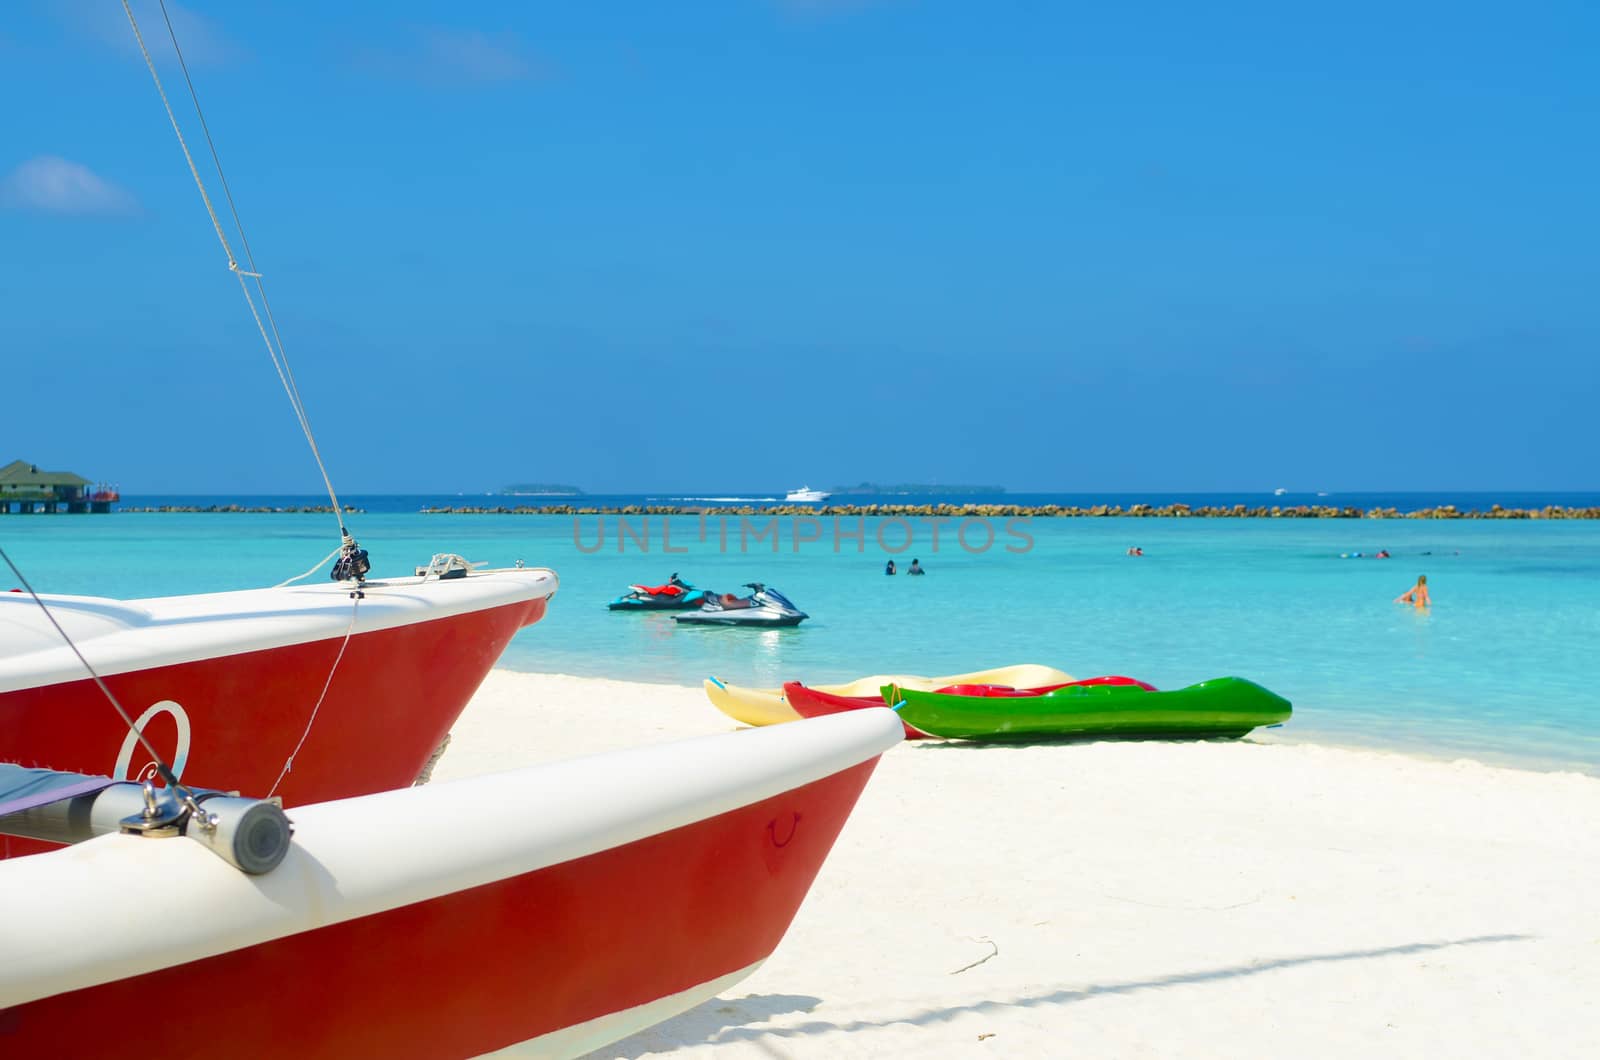 Boat on the white sand beach at maldives island